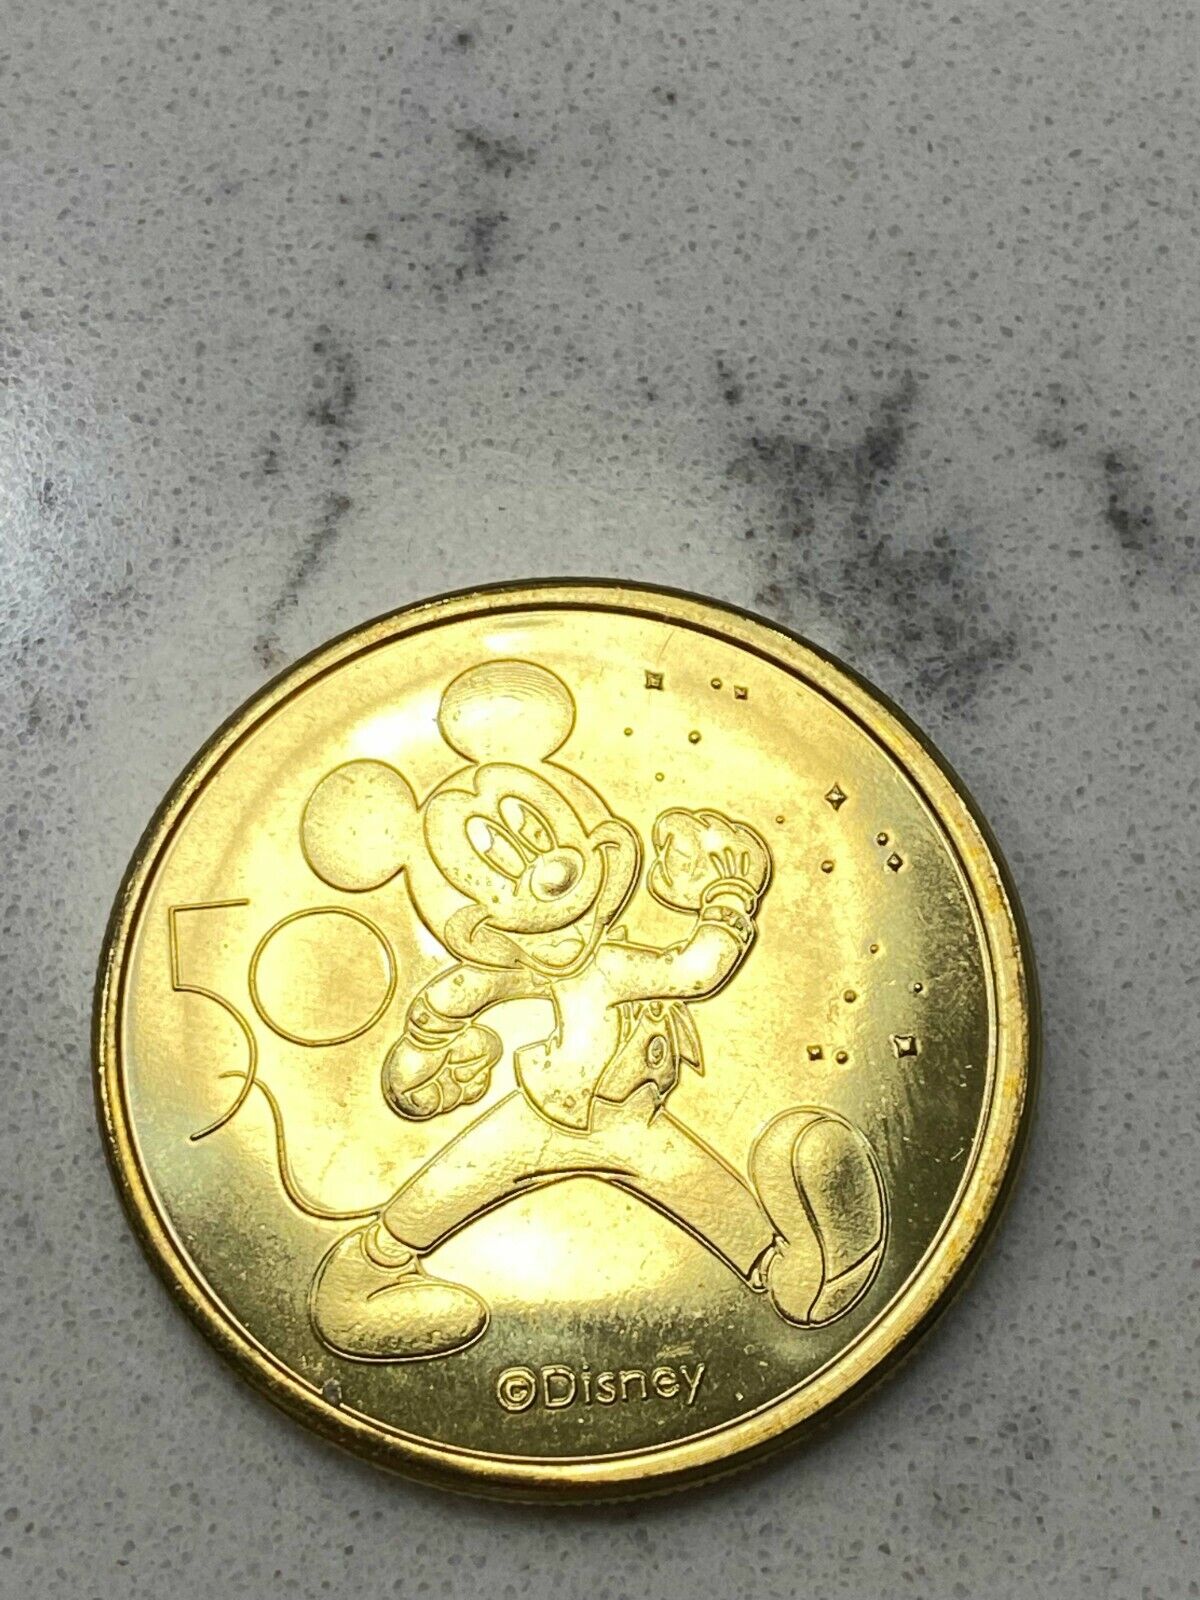 NEW Disney World 50th Anniversary Golden Medallion Coin Mickey, Minnie, Goofy